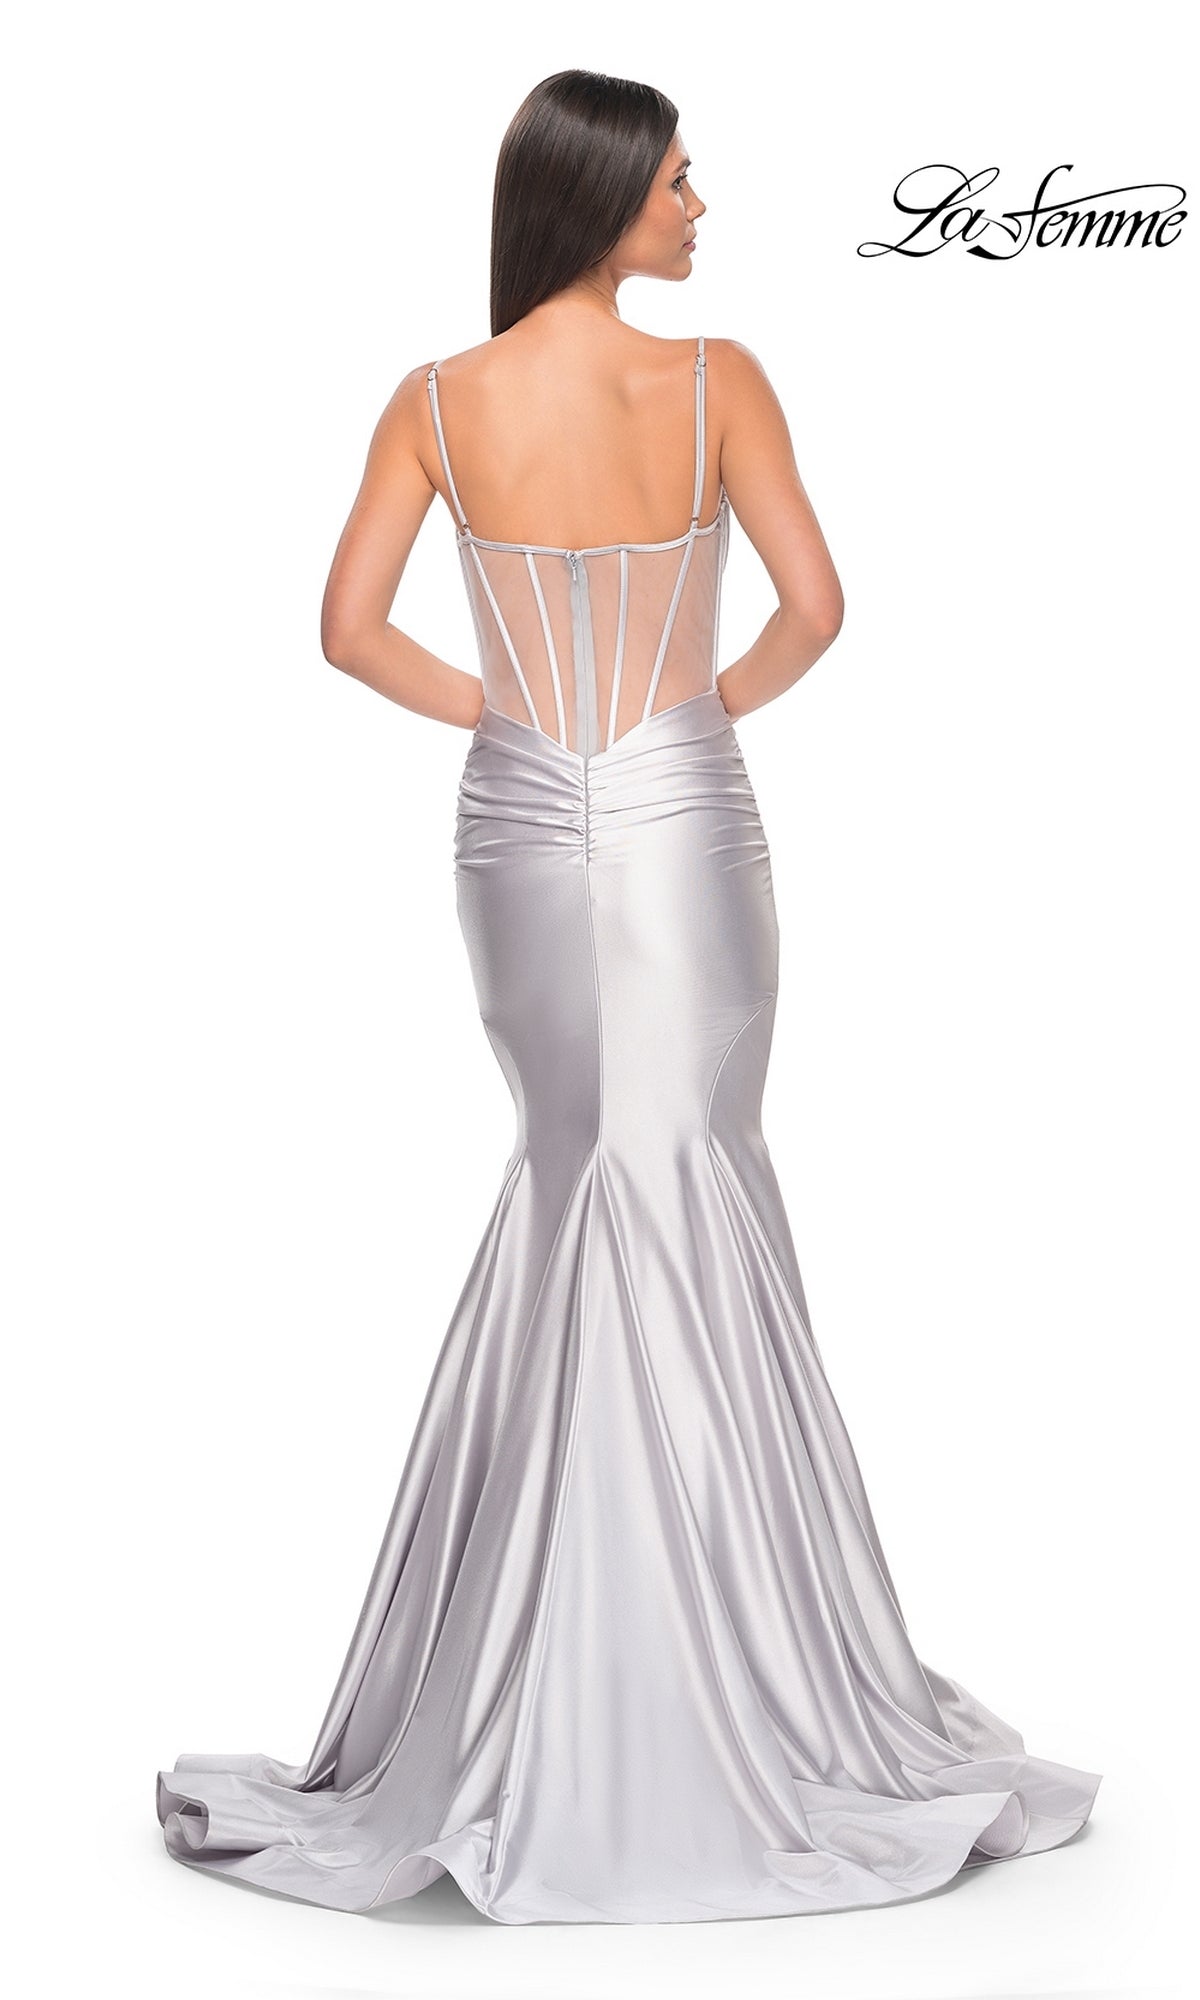  La Femme 32269 Formal Prom Dress